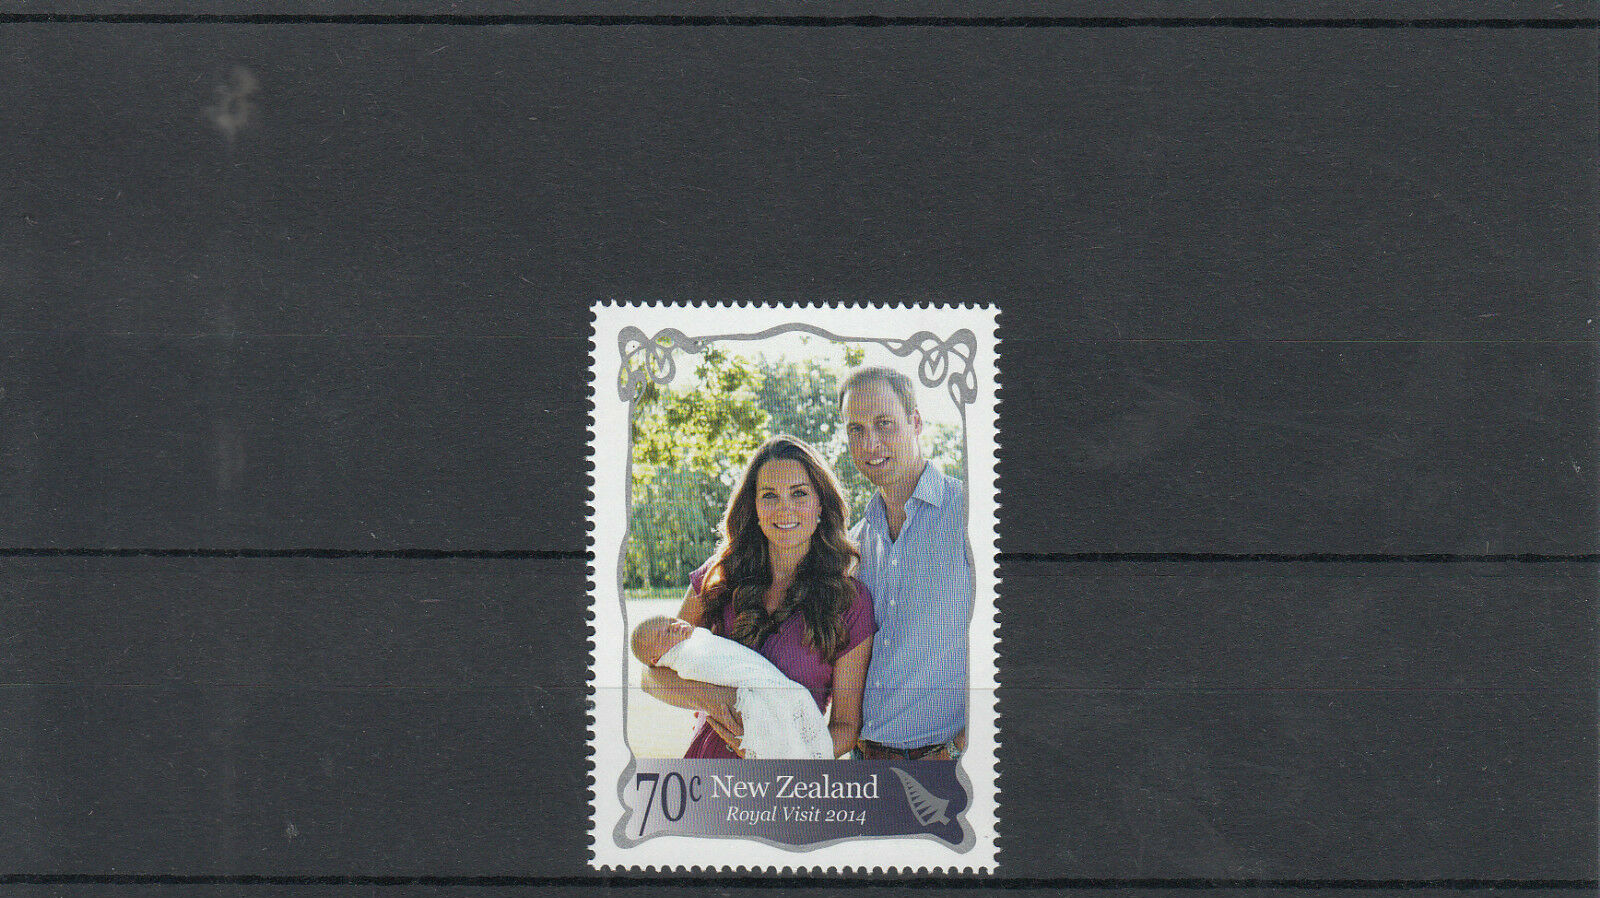 New Zealand NZ 2014 MNH Royal Visit 1v 70c Stamp Prince William Kate George Baby